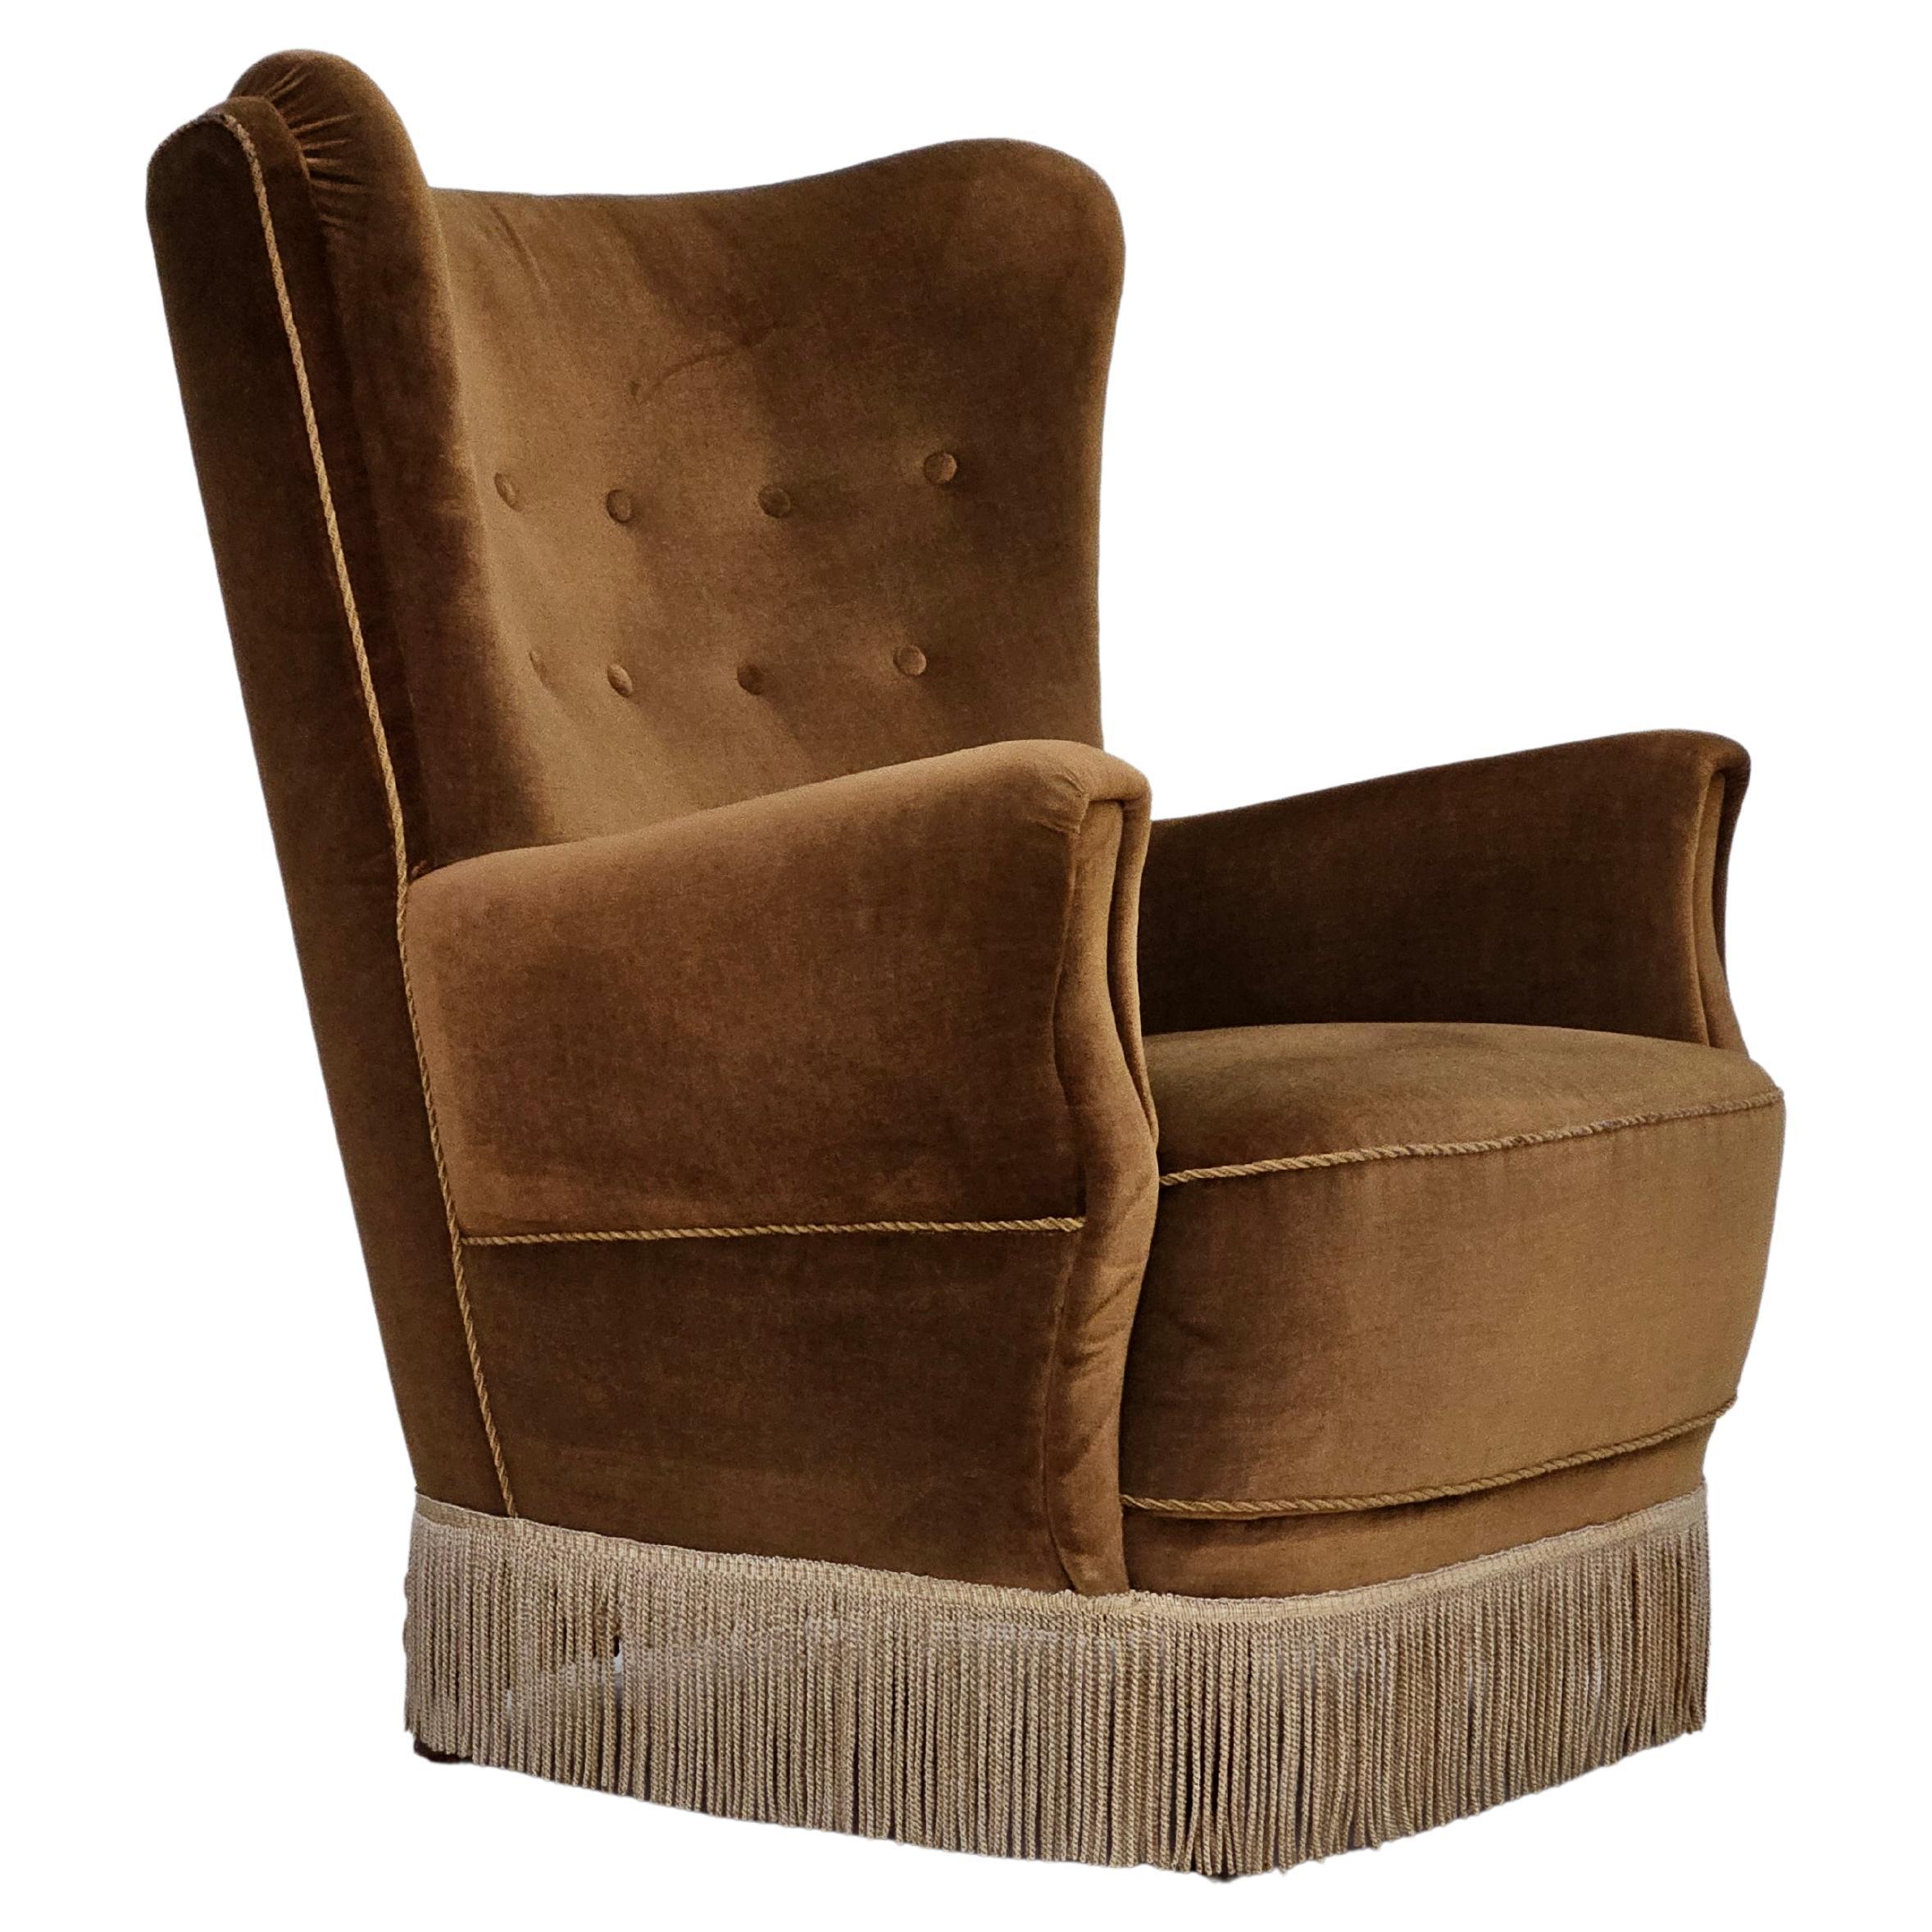 1960s, Danish highback relax chair, original upholstery, green velour. For Sale